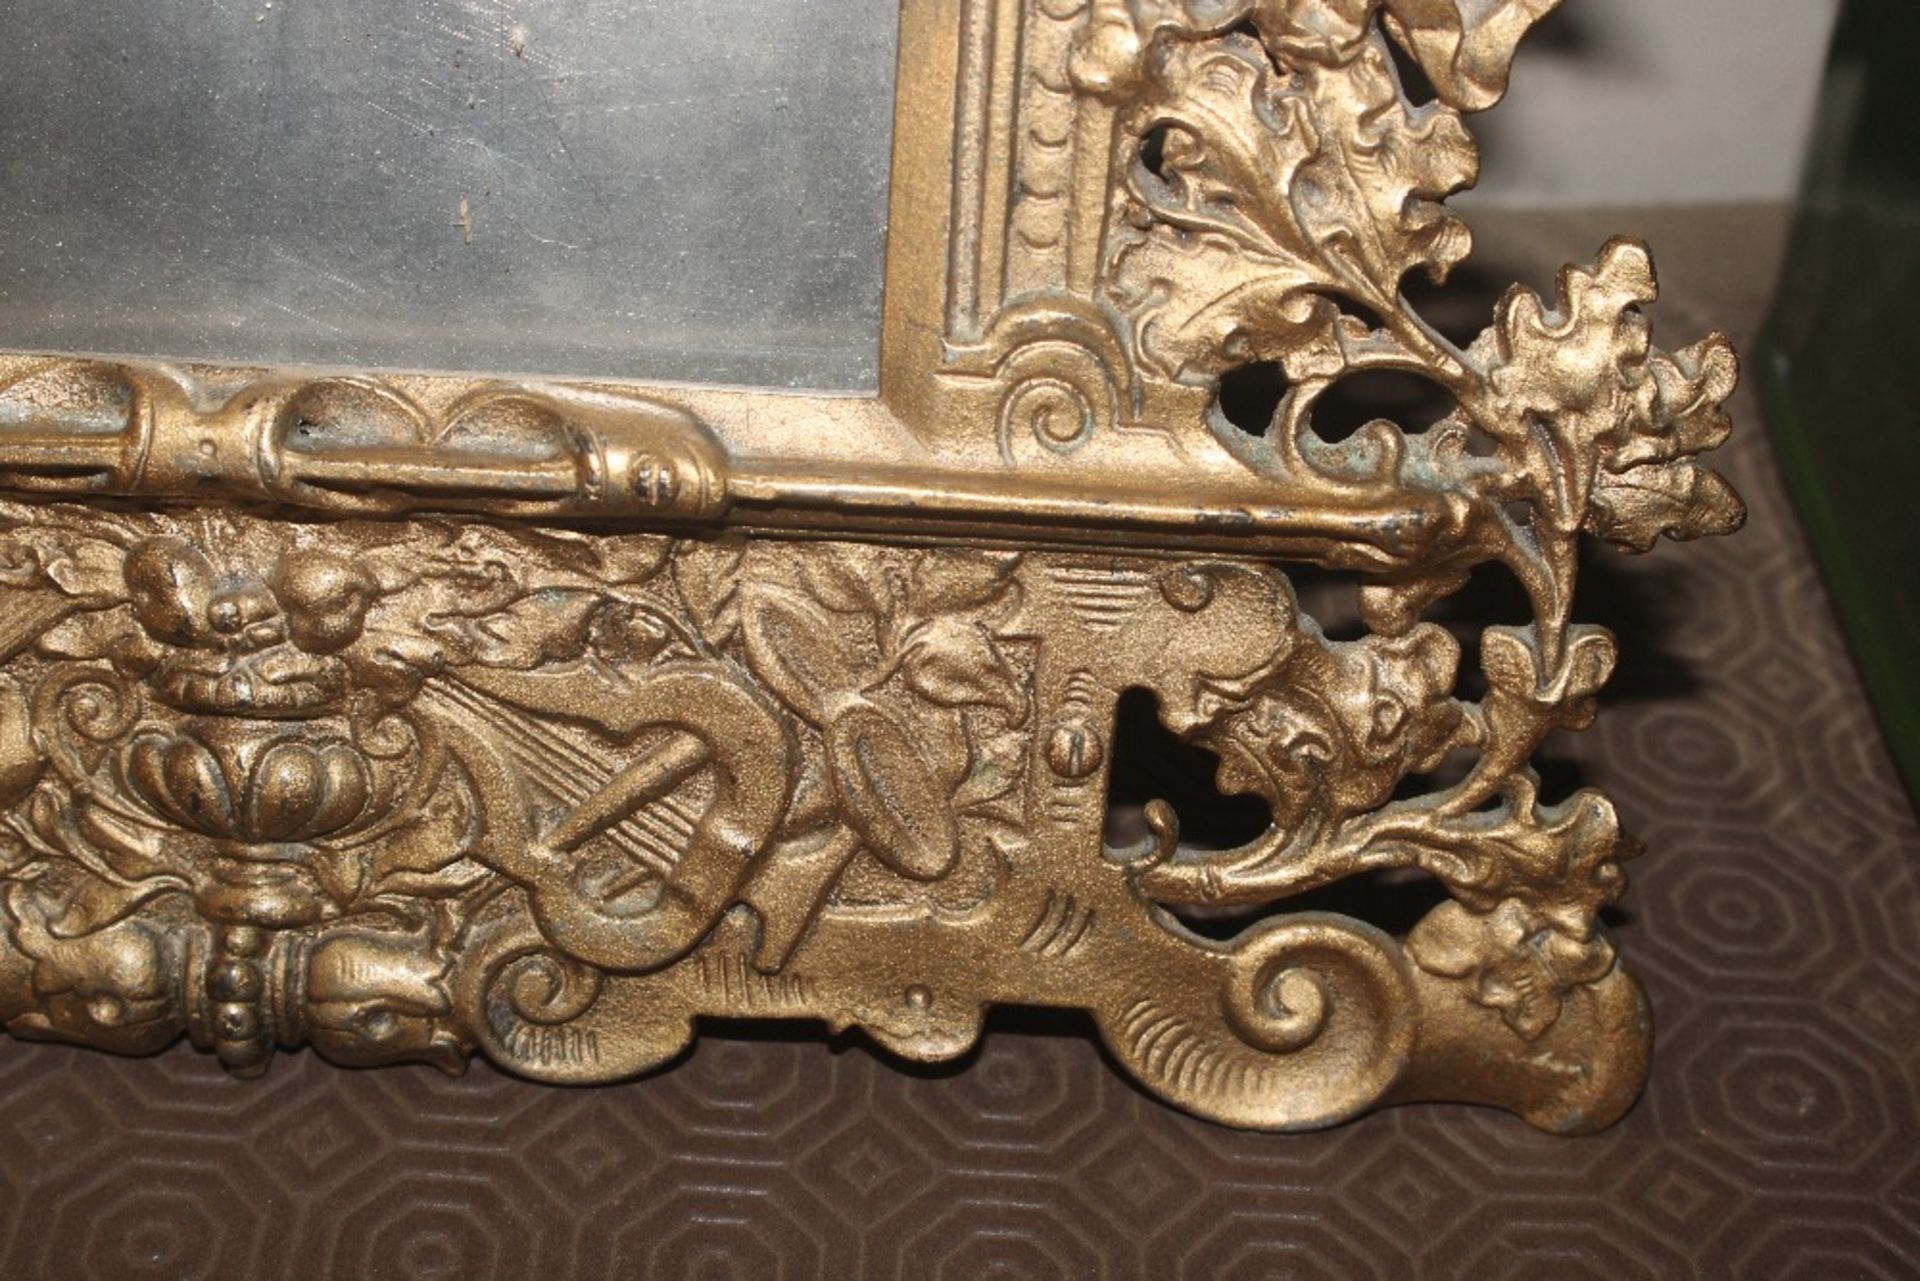 A gilt metal easel photo frame - Image 2 of 4